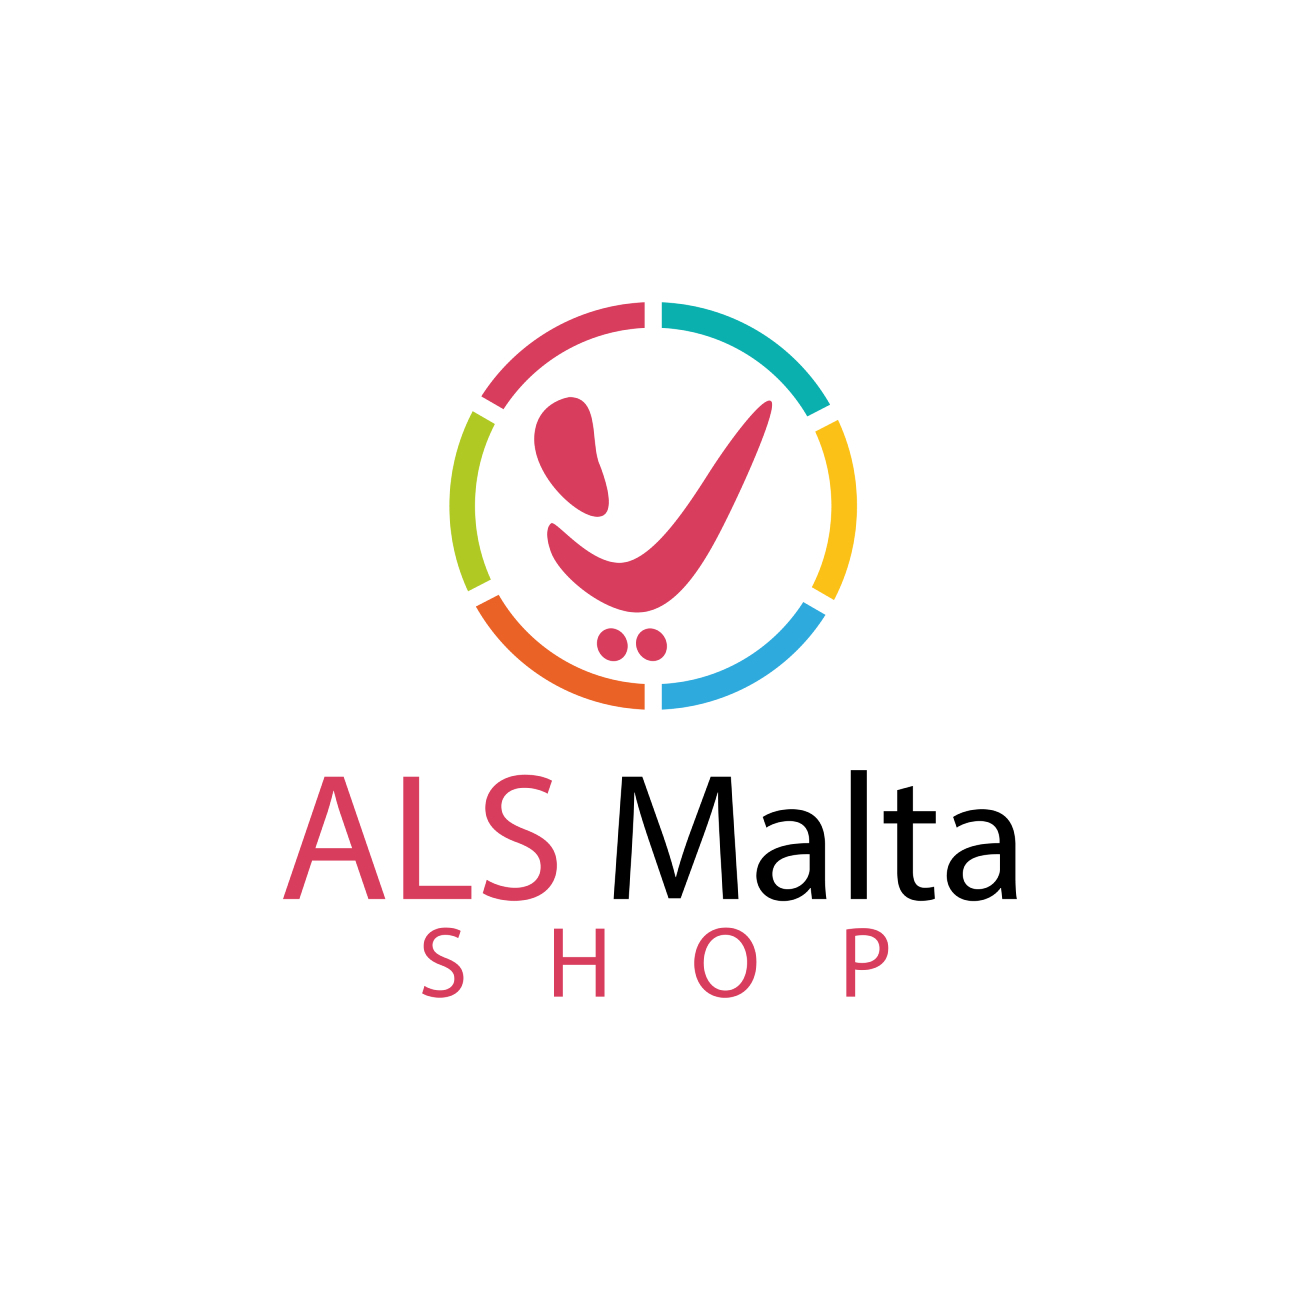 Best ALS Malta Shop